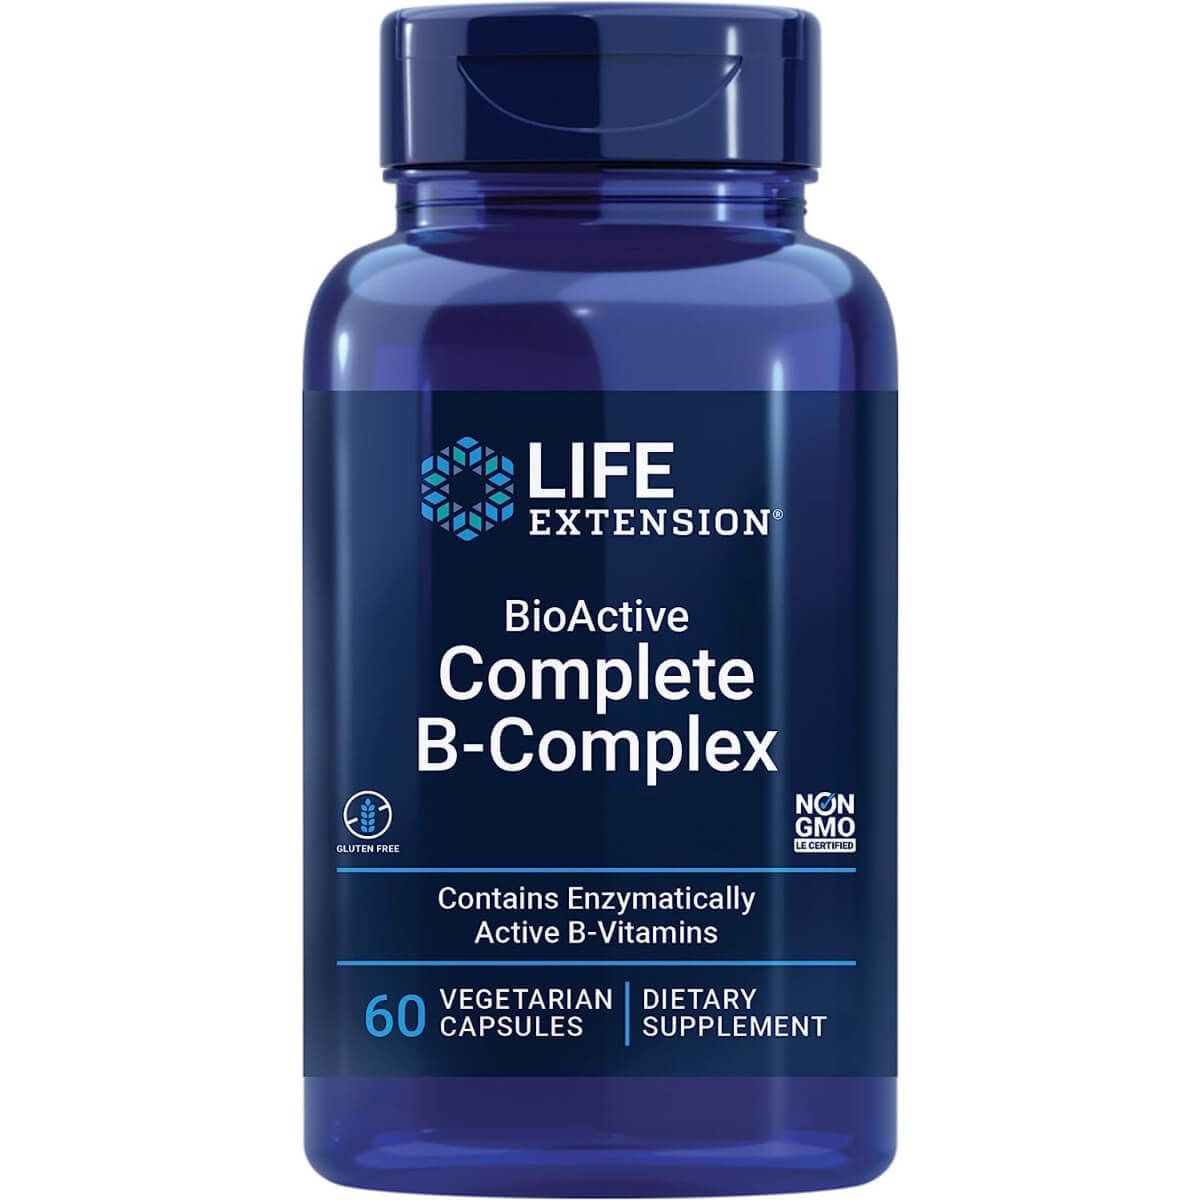 Photos - Vitamins & Minerals Life Extension BioActive Complete B-Complex 60 Vegetarian Capsules PBW-P32 